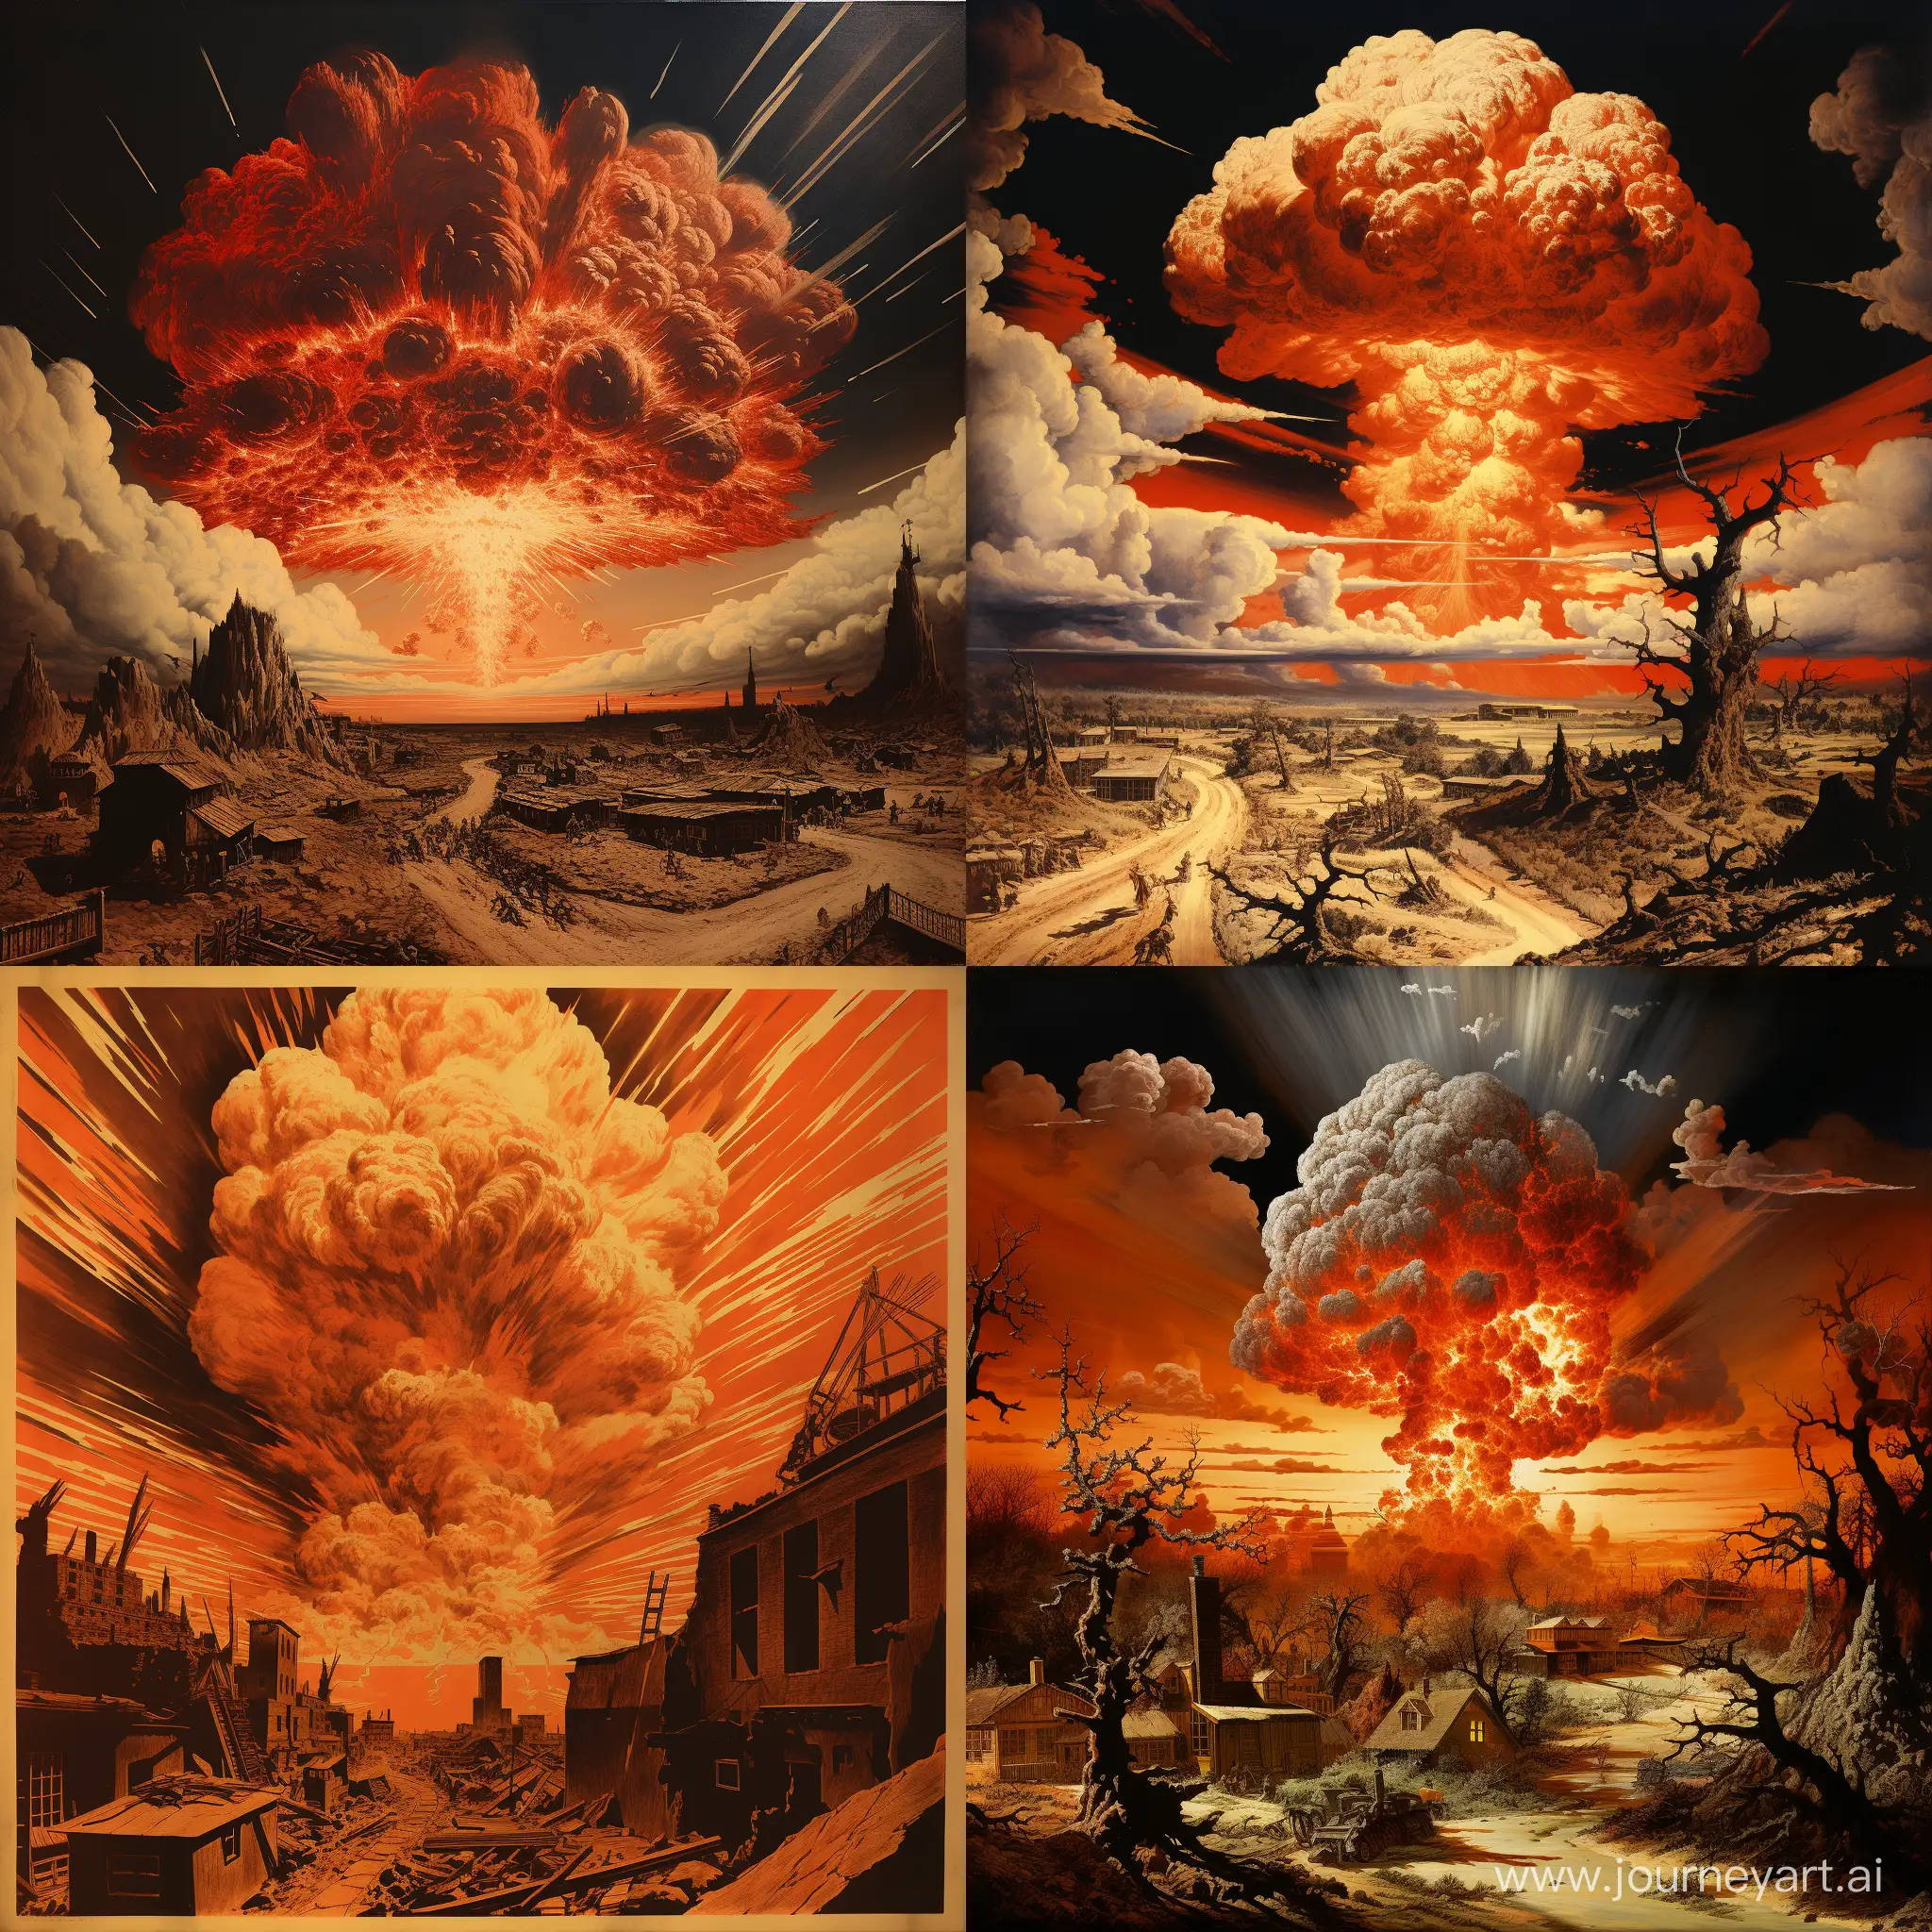 Destruction-and-Propaganda-Massive-Nuclear-Explosion-in-1940s-American-Art-Style